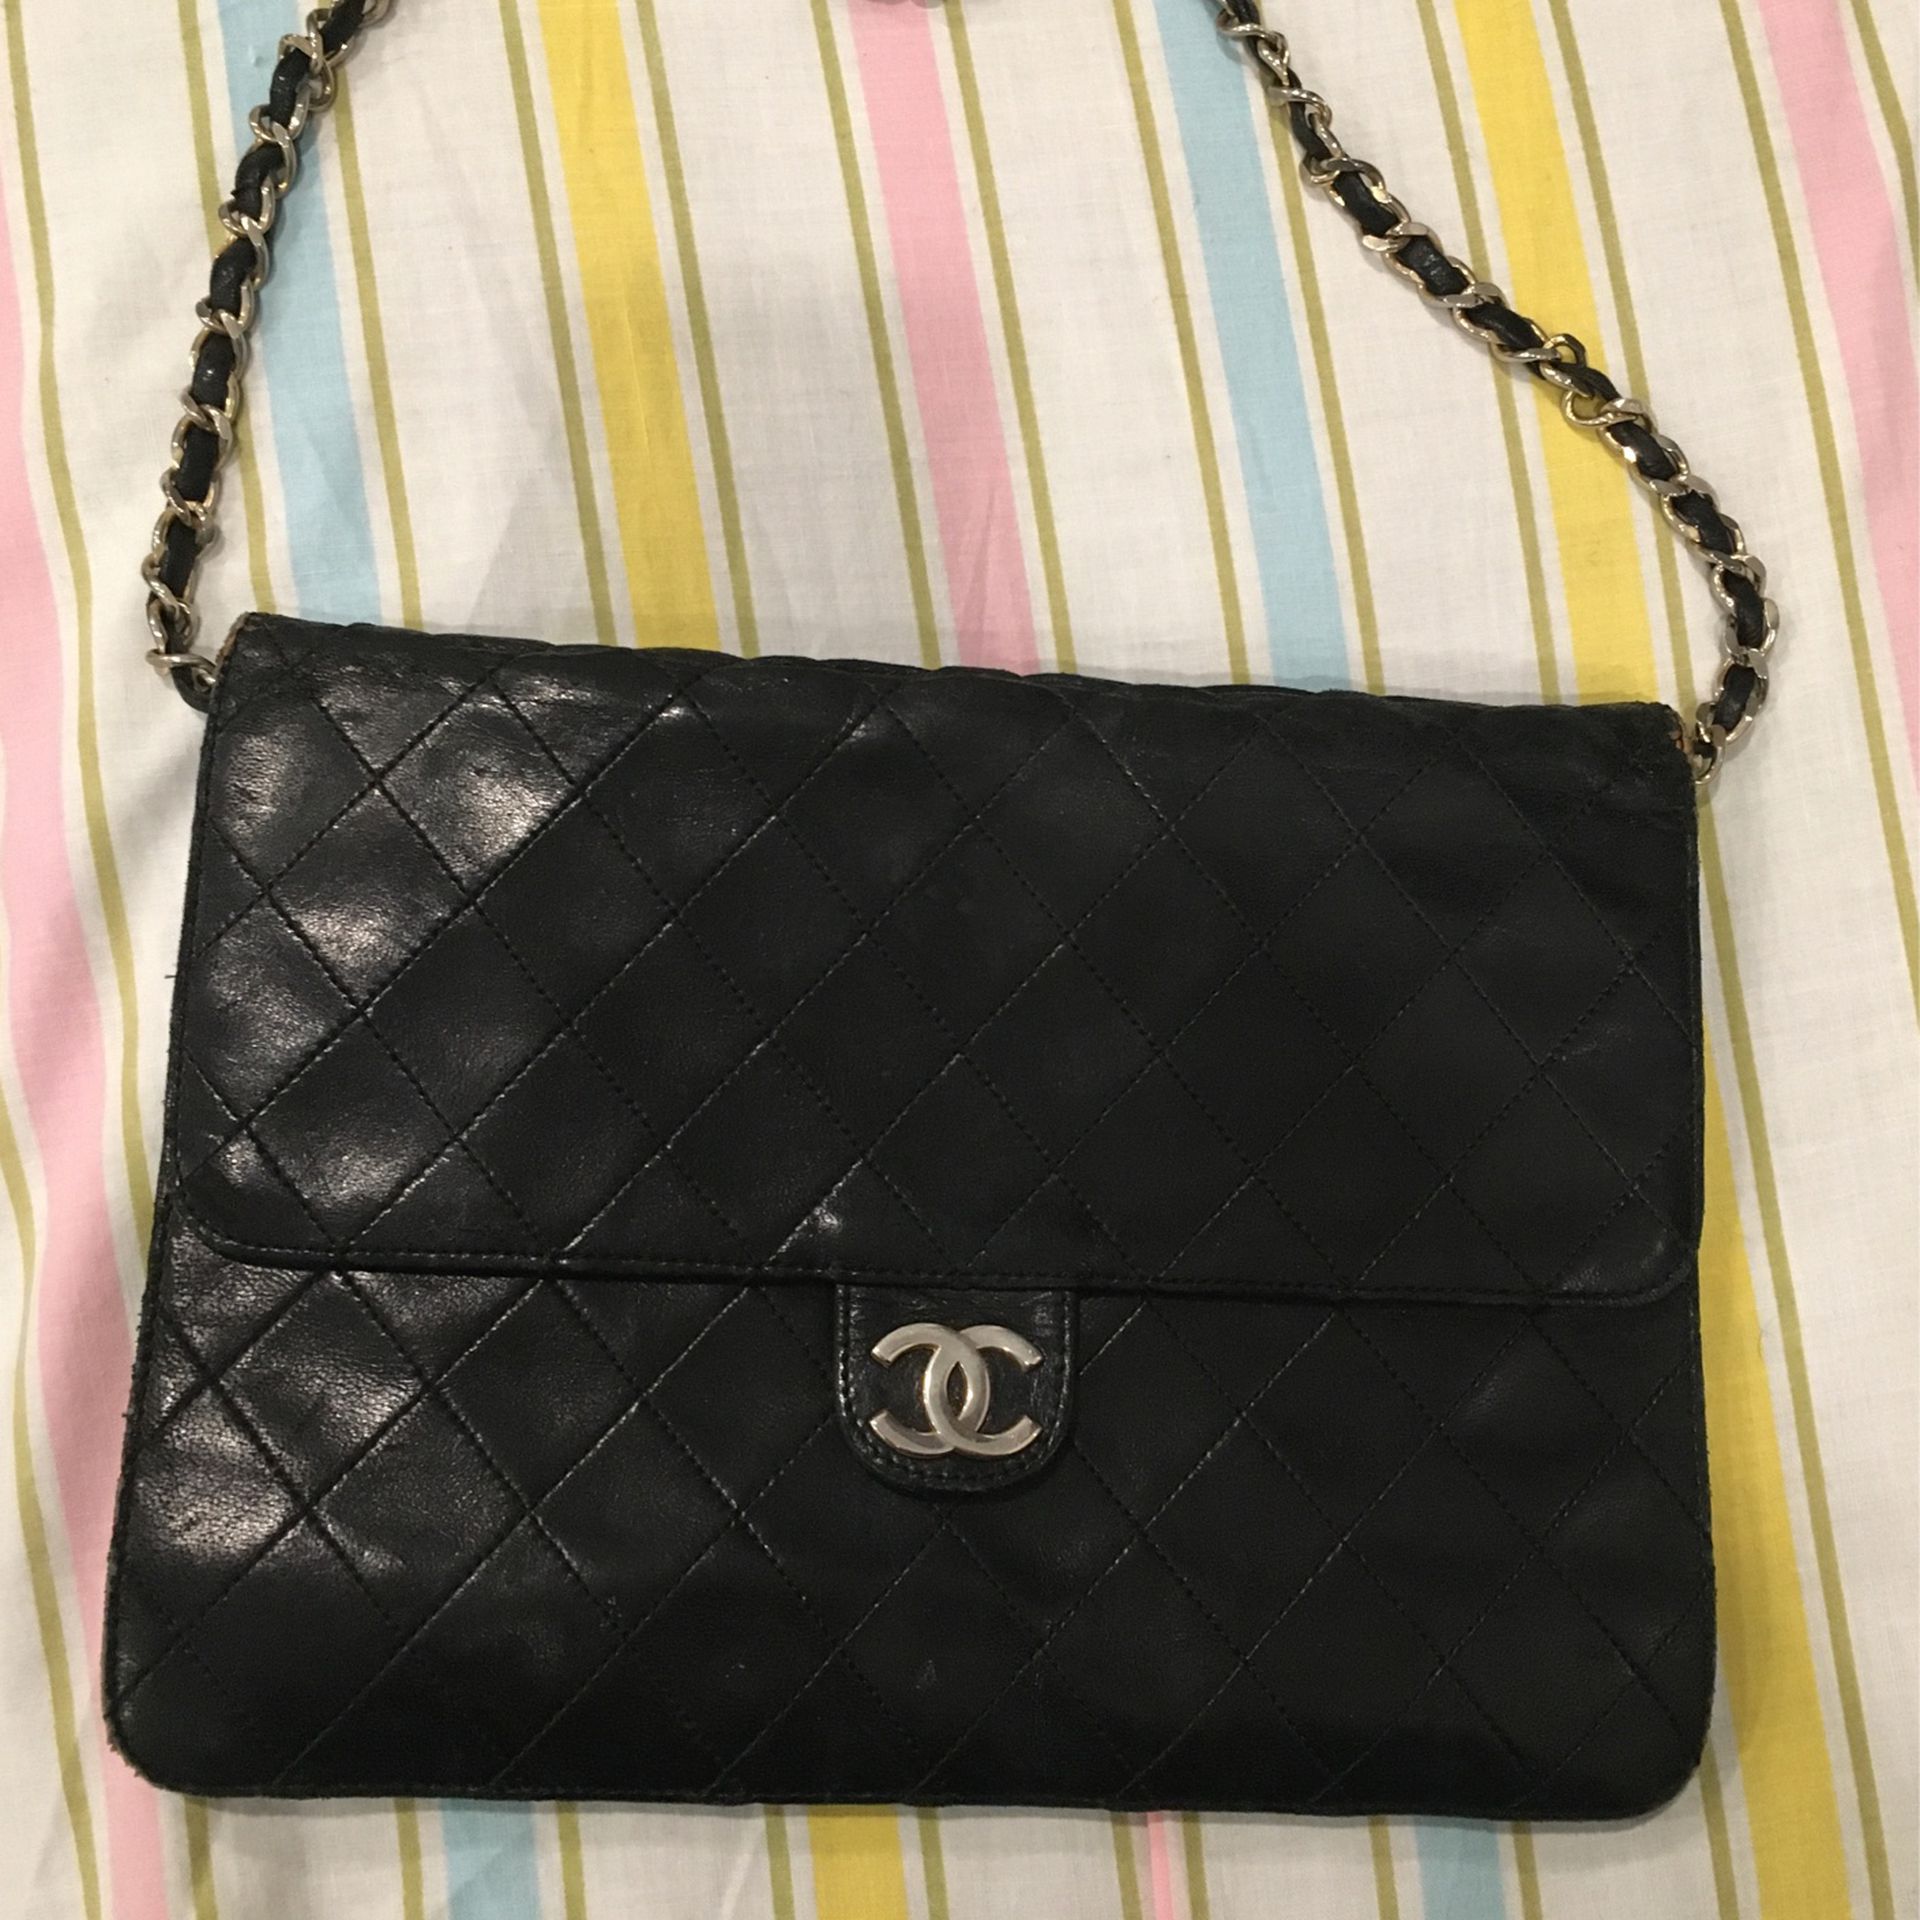 Chanel Handbag,  Black, Authentic